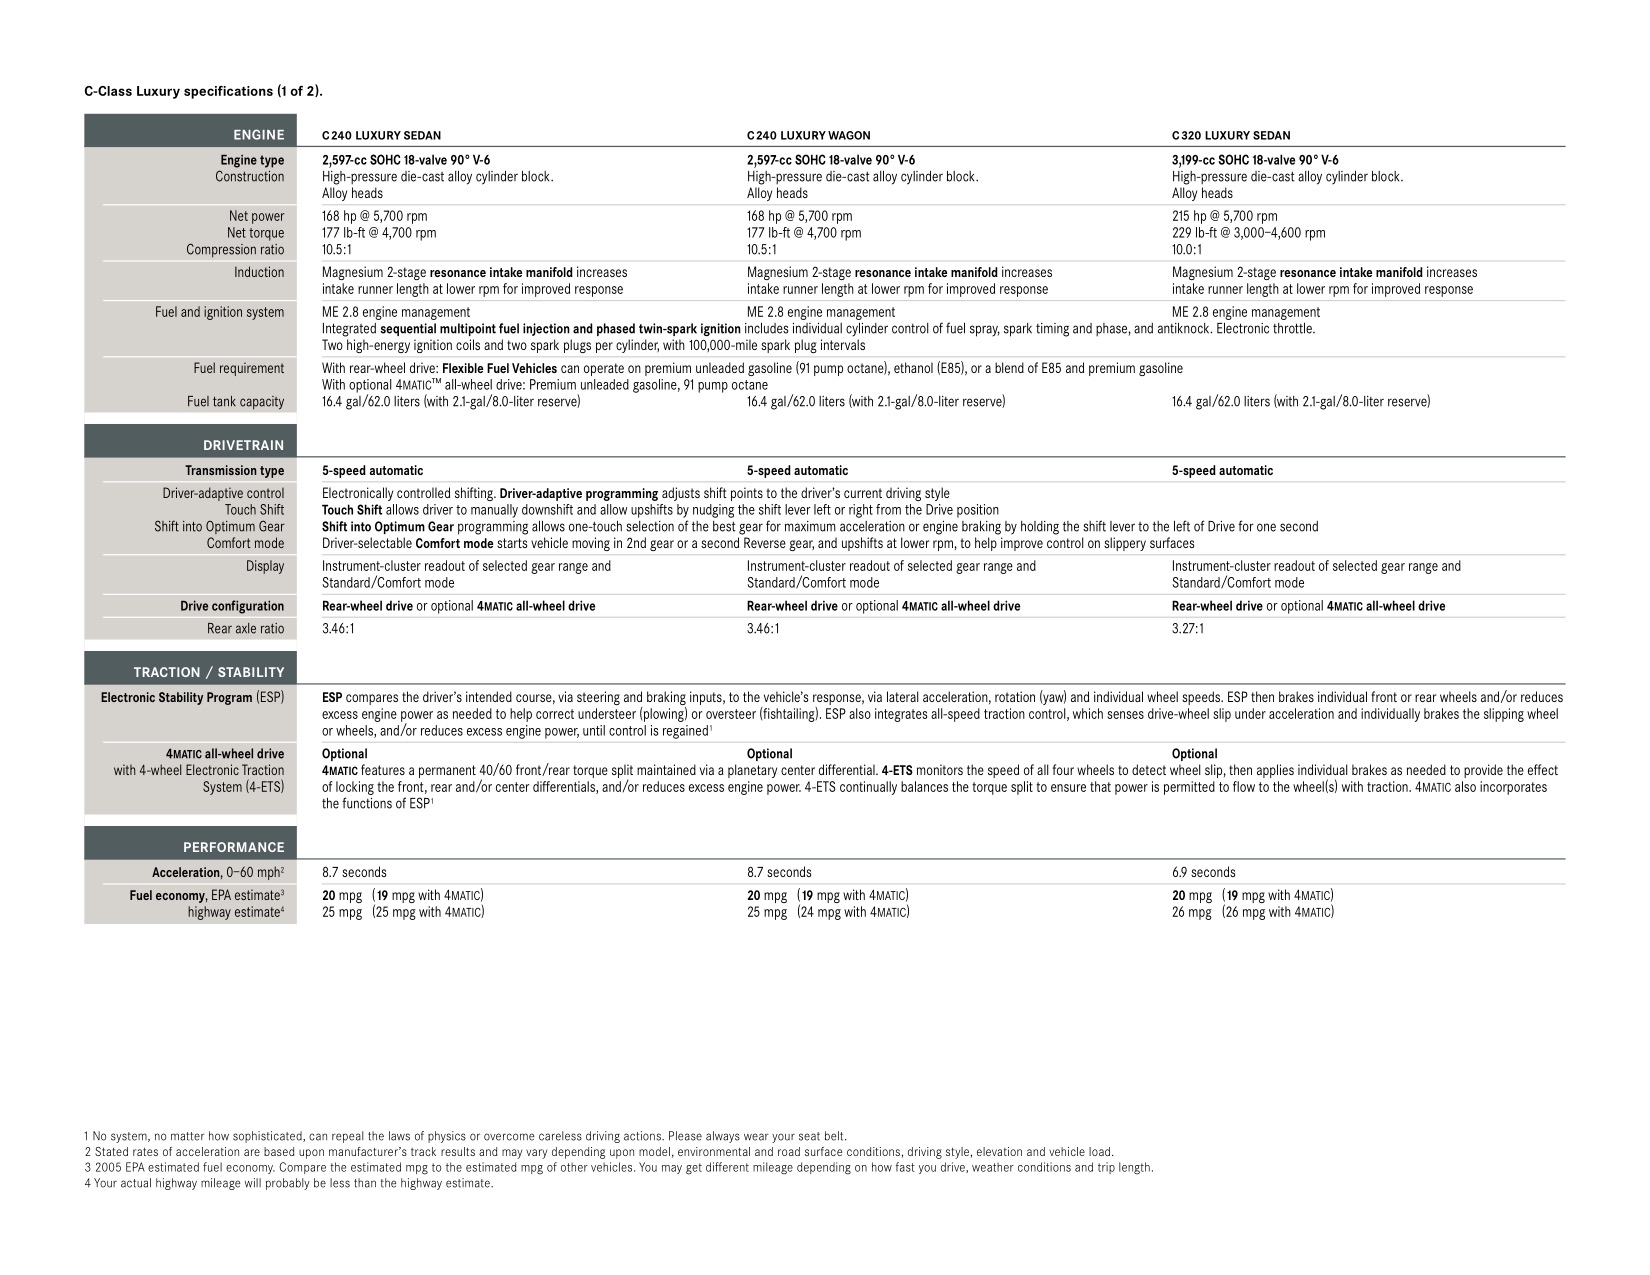 2005 Mercedes-Benz C-Class Luxury Brochure Page 1